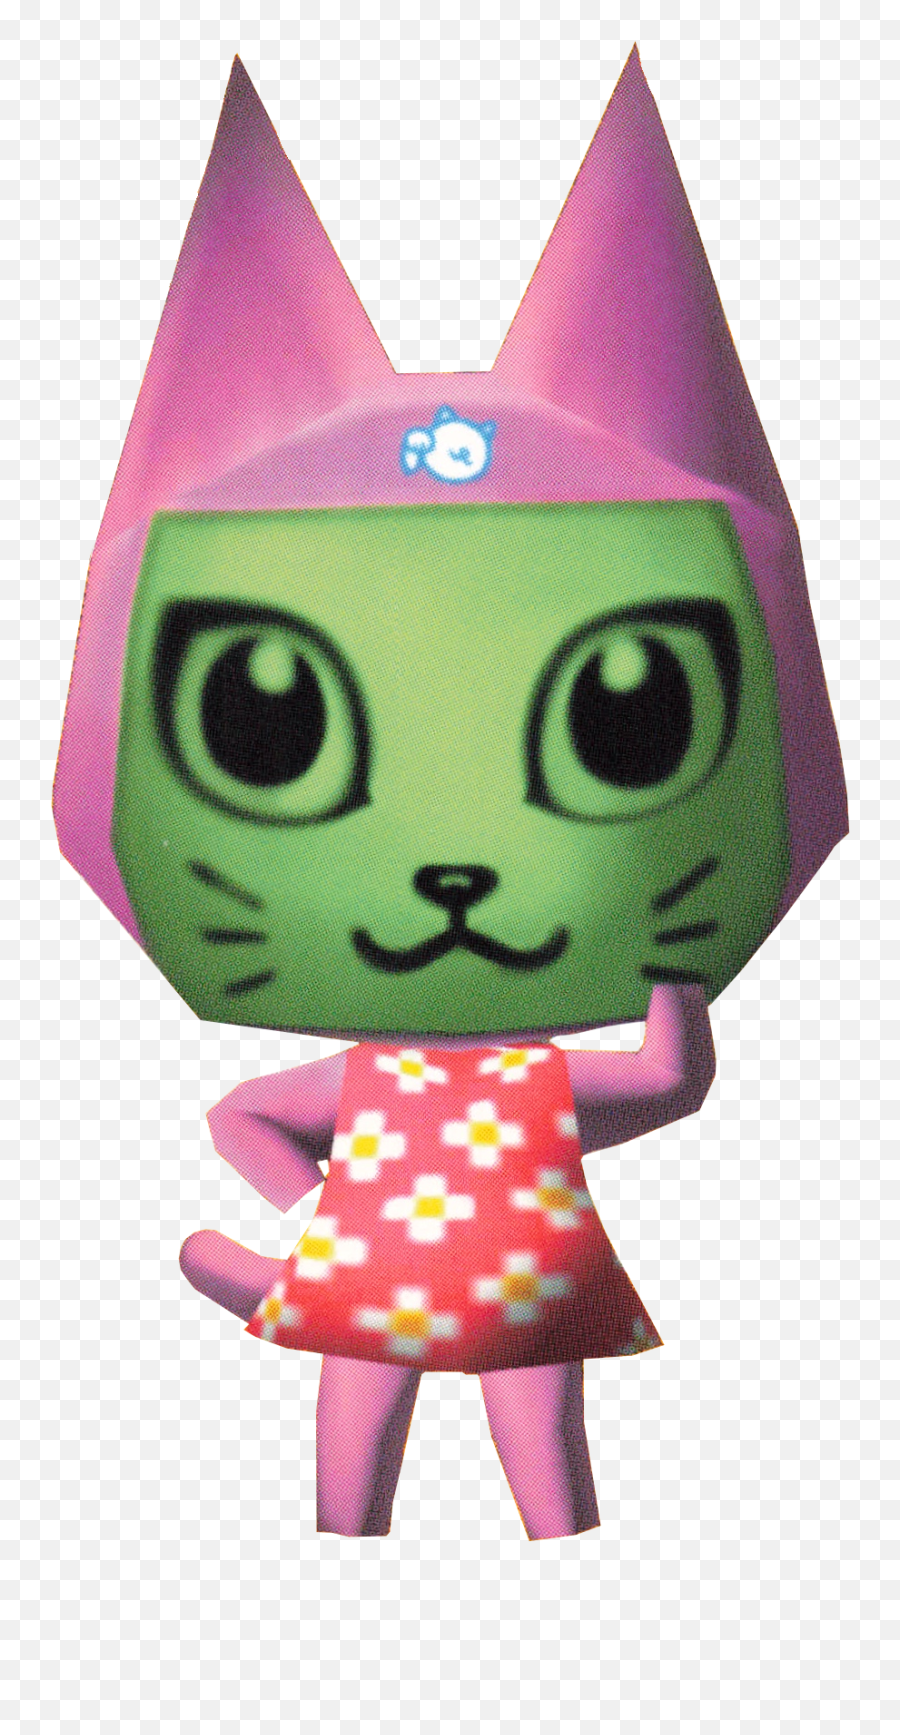 Meow - Animal Crossing Wiki Nookipedia Meow Animal Crossing Emoji,Acnl Hidden Emotions